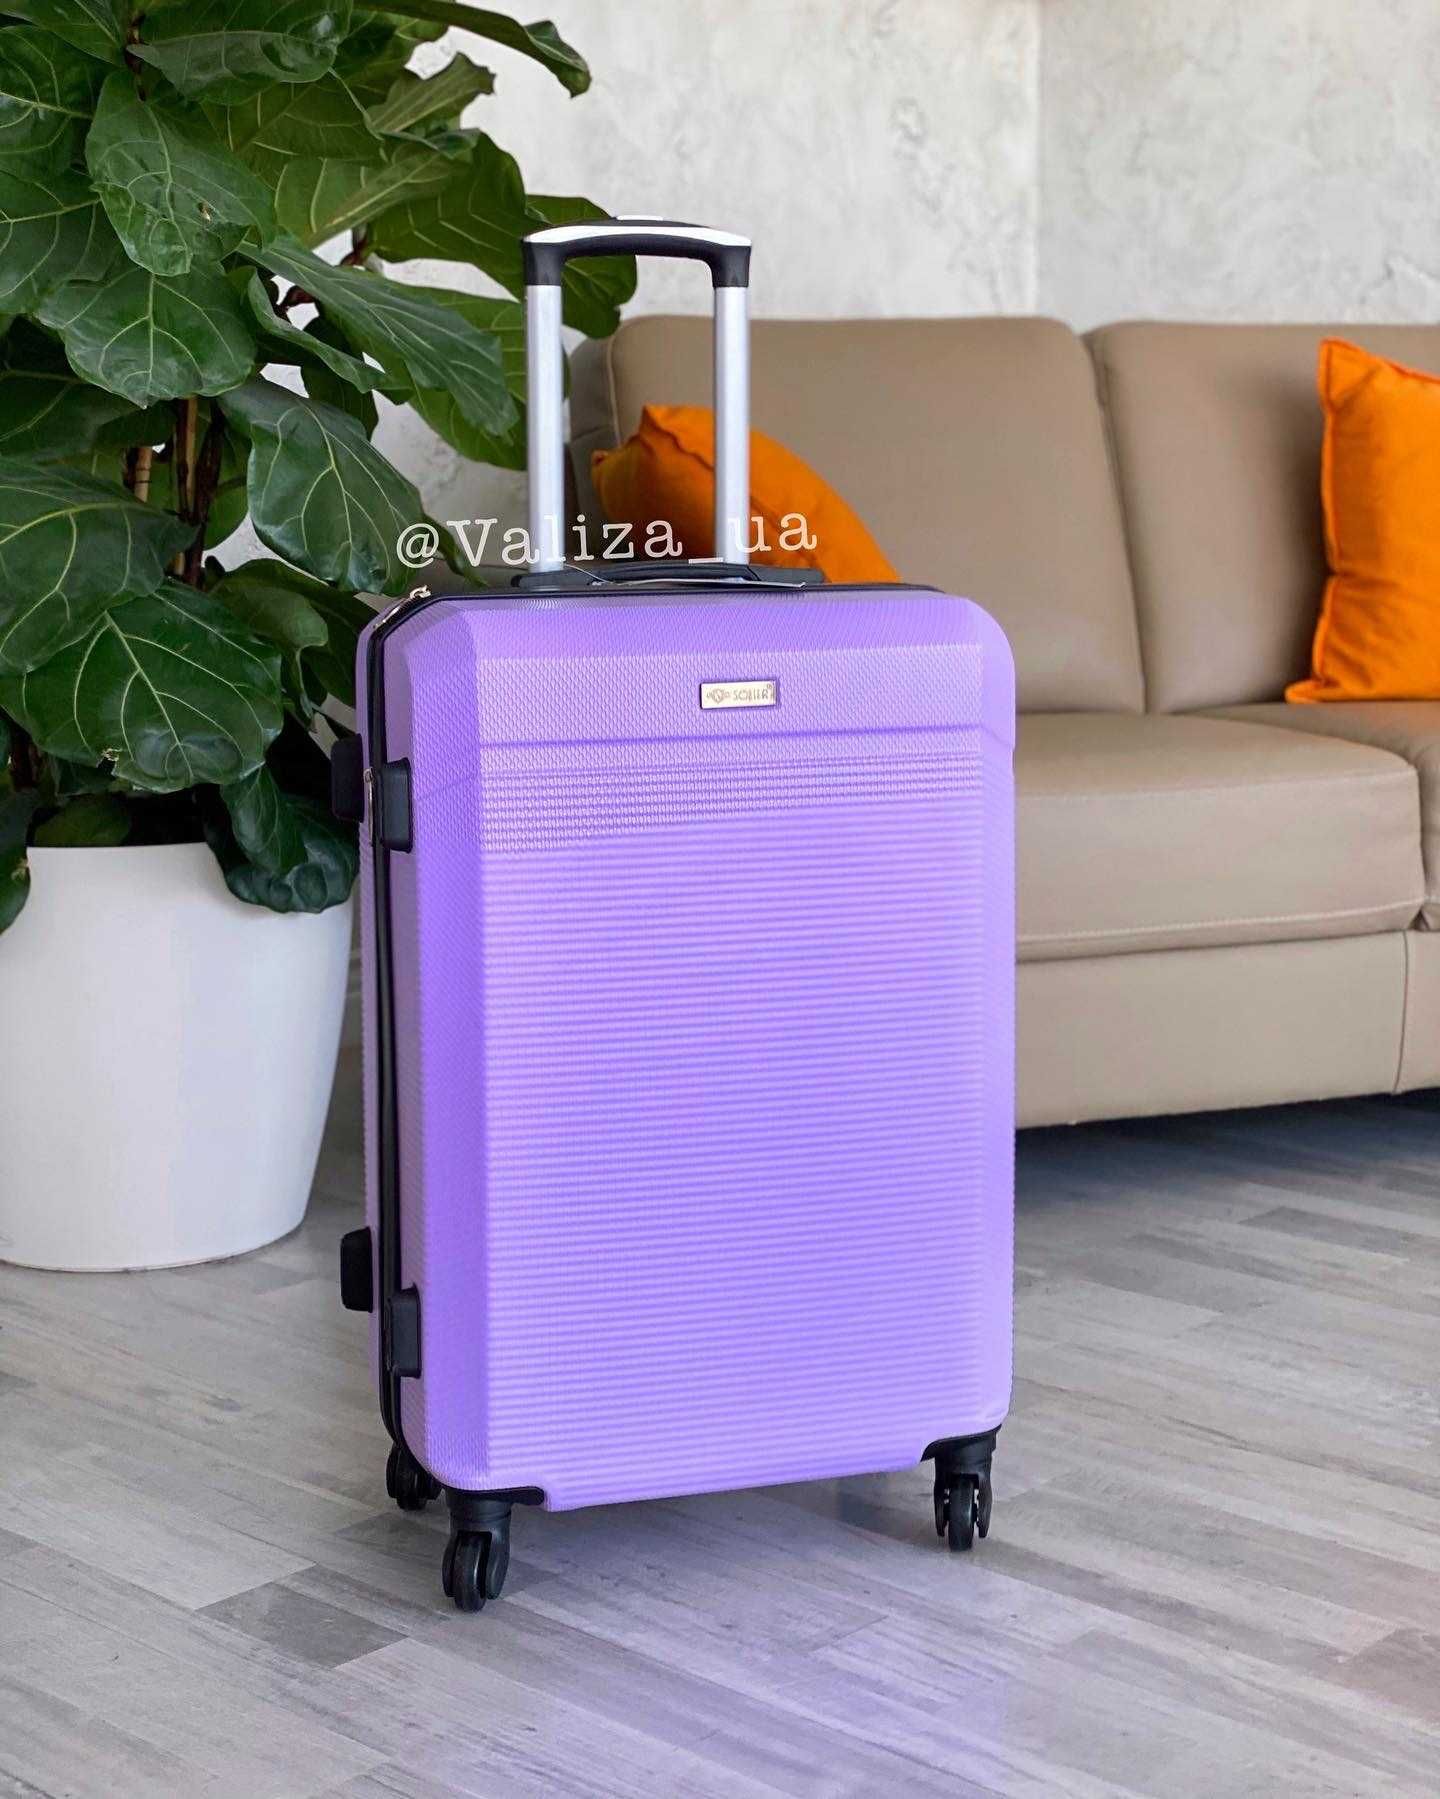 УЛЬТРА ЛЕГКИЙ чемодан ручная кладь пластиковый чемодан валіза валізи